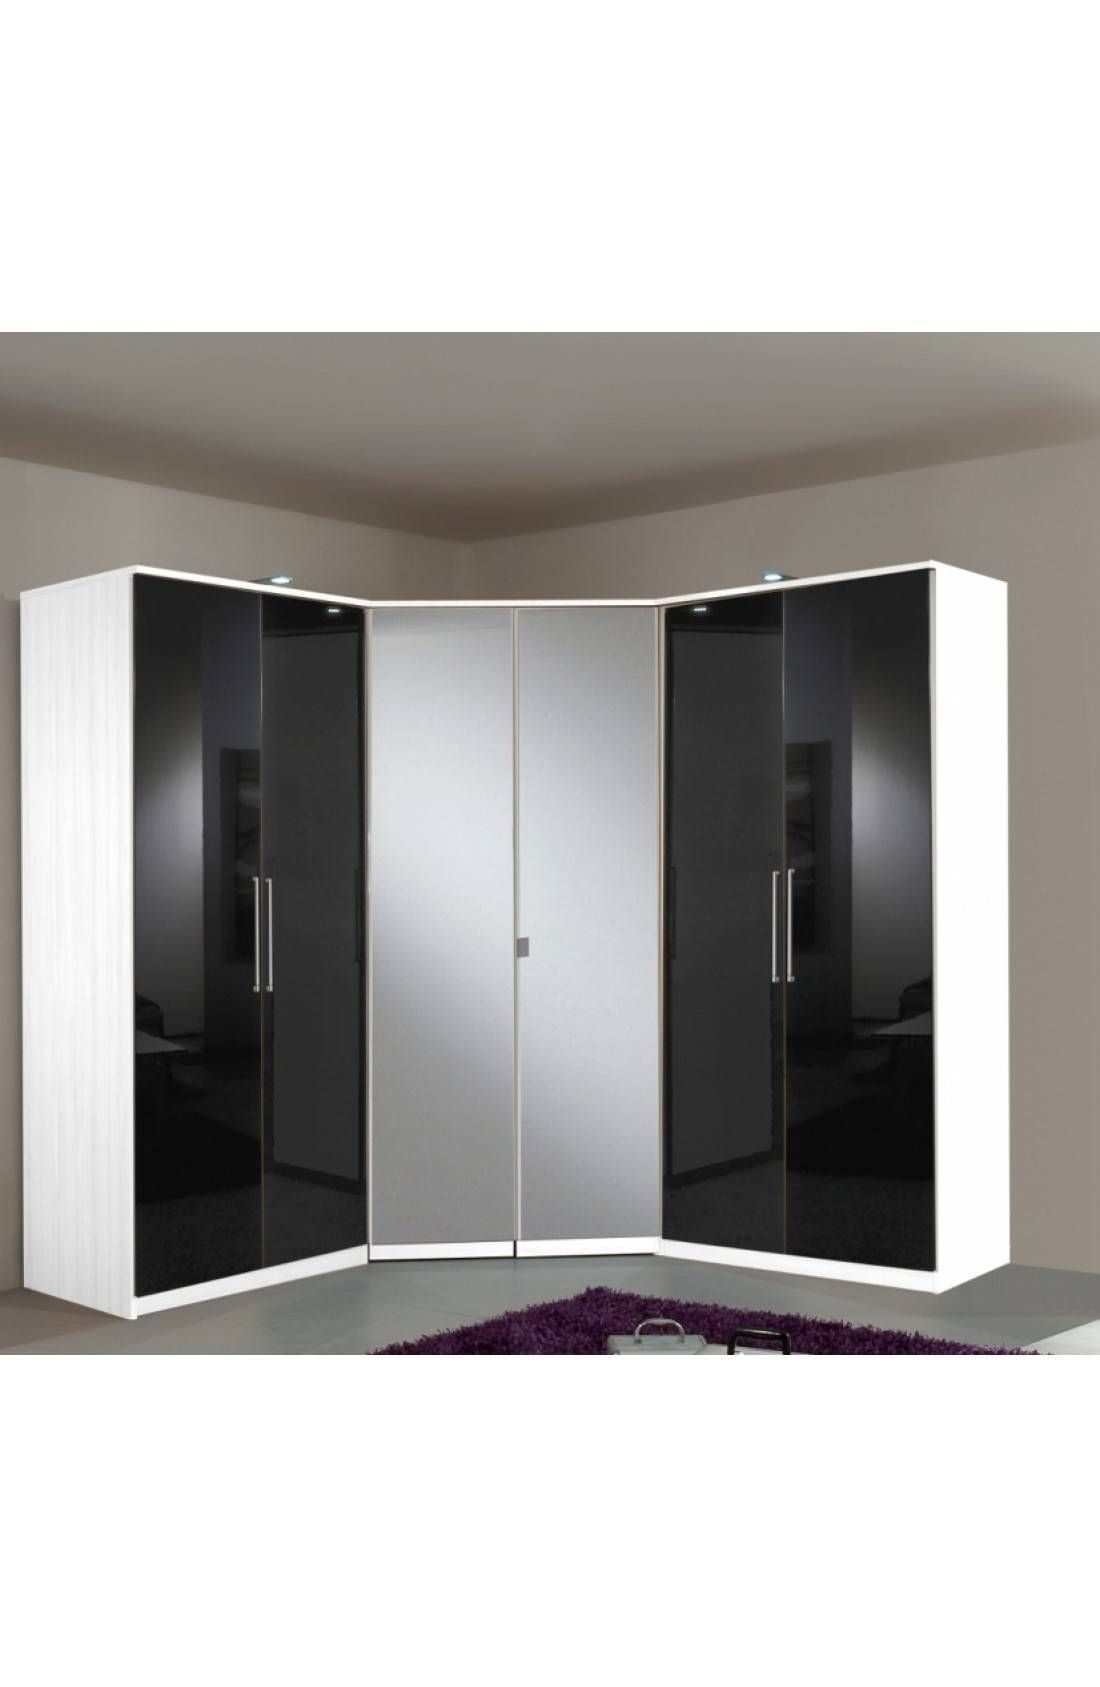 Slumberhaus 'gamma' 6 Door Corner Wardrobe Fitment With White With Regard To Black Corner Wardrobes (View 5 of 15)